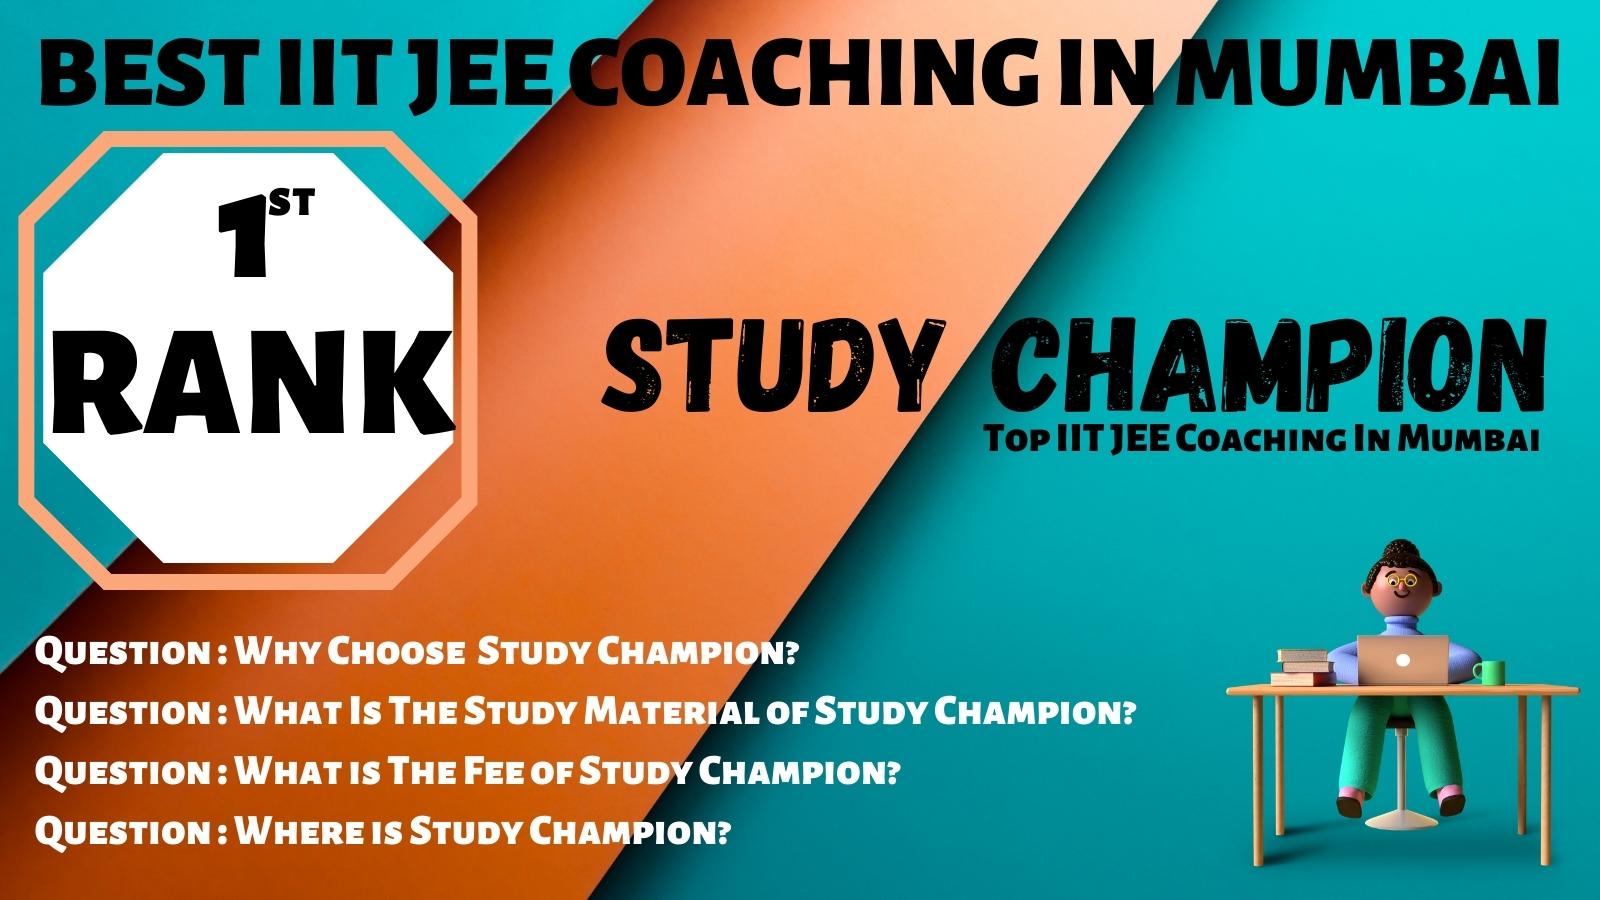 Best IIT JEE Coaching Centers In Mumbai